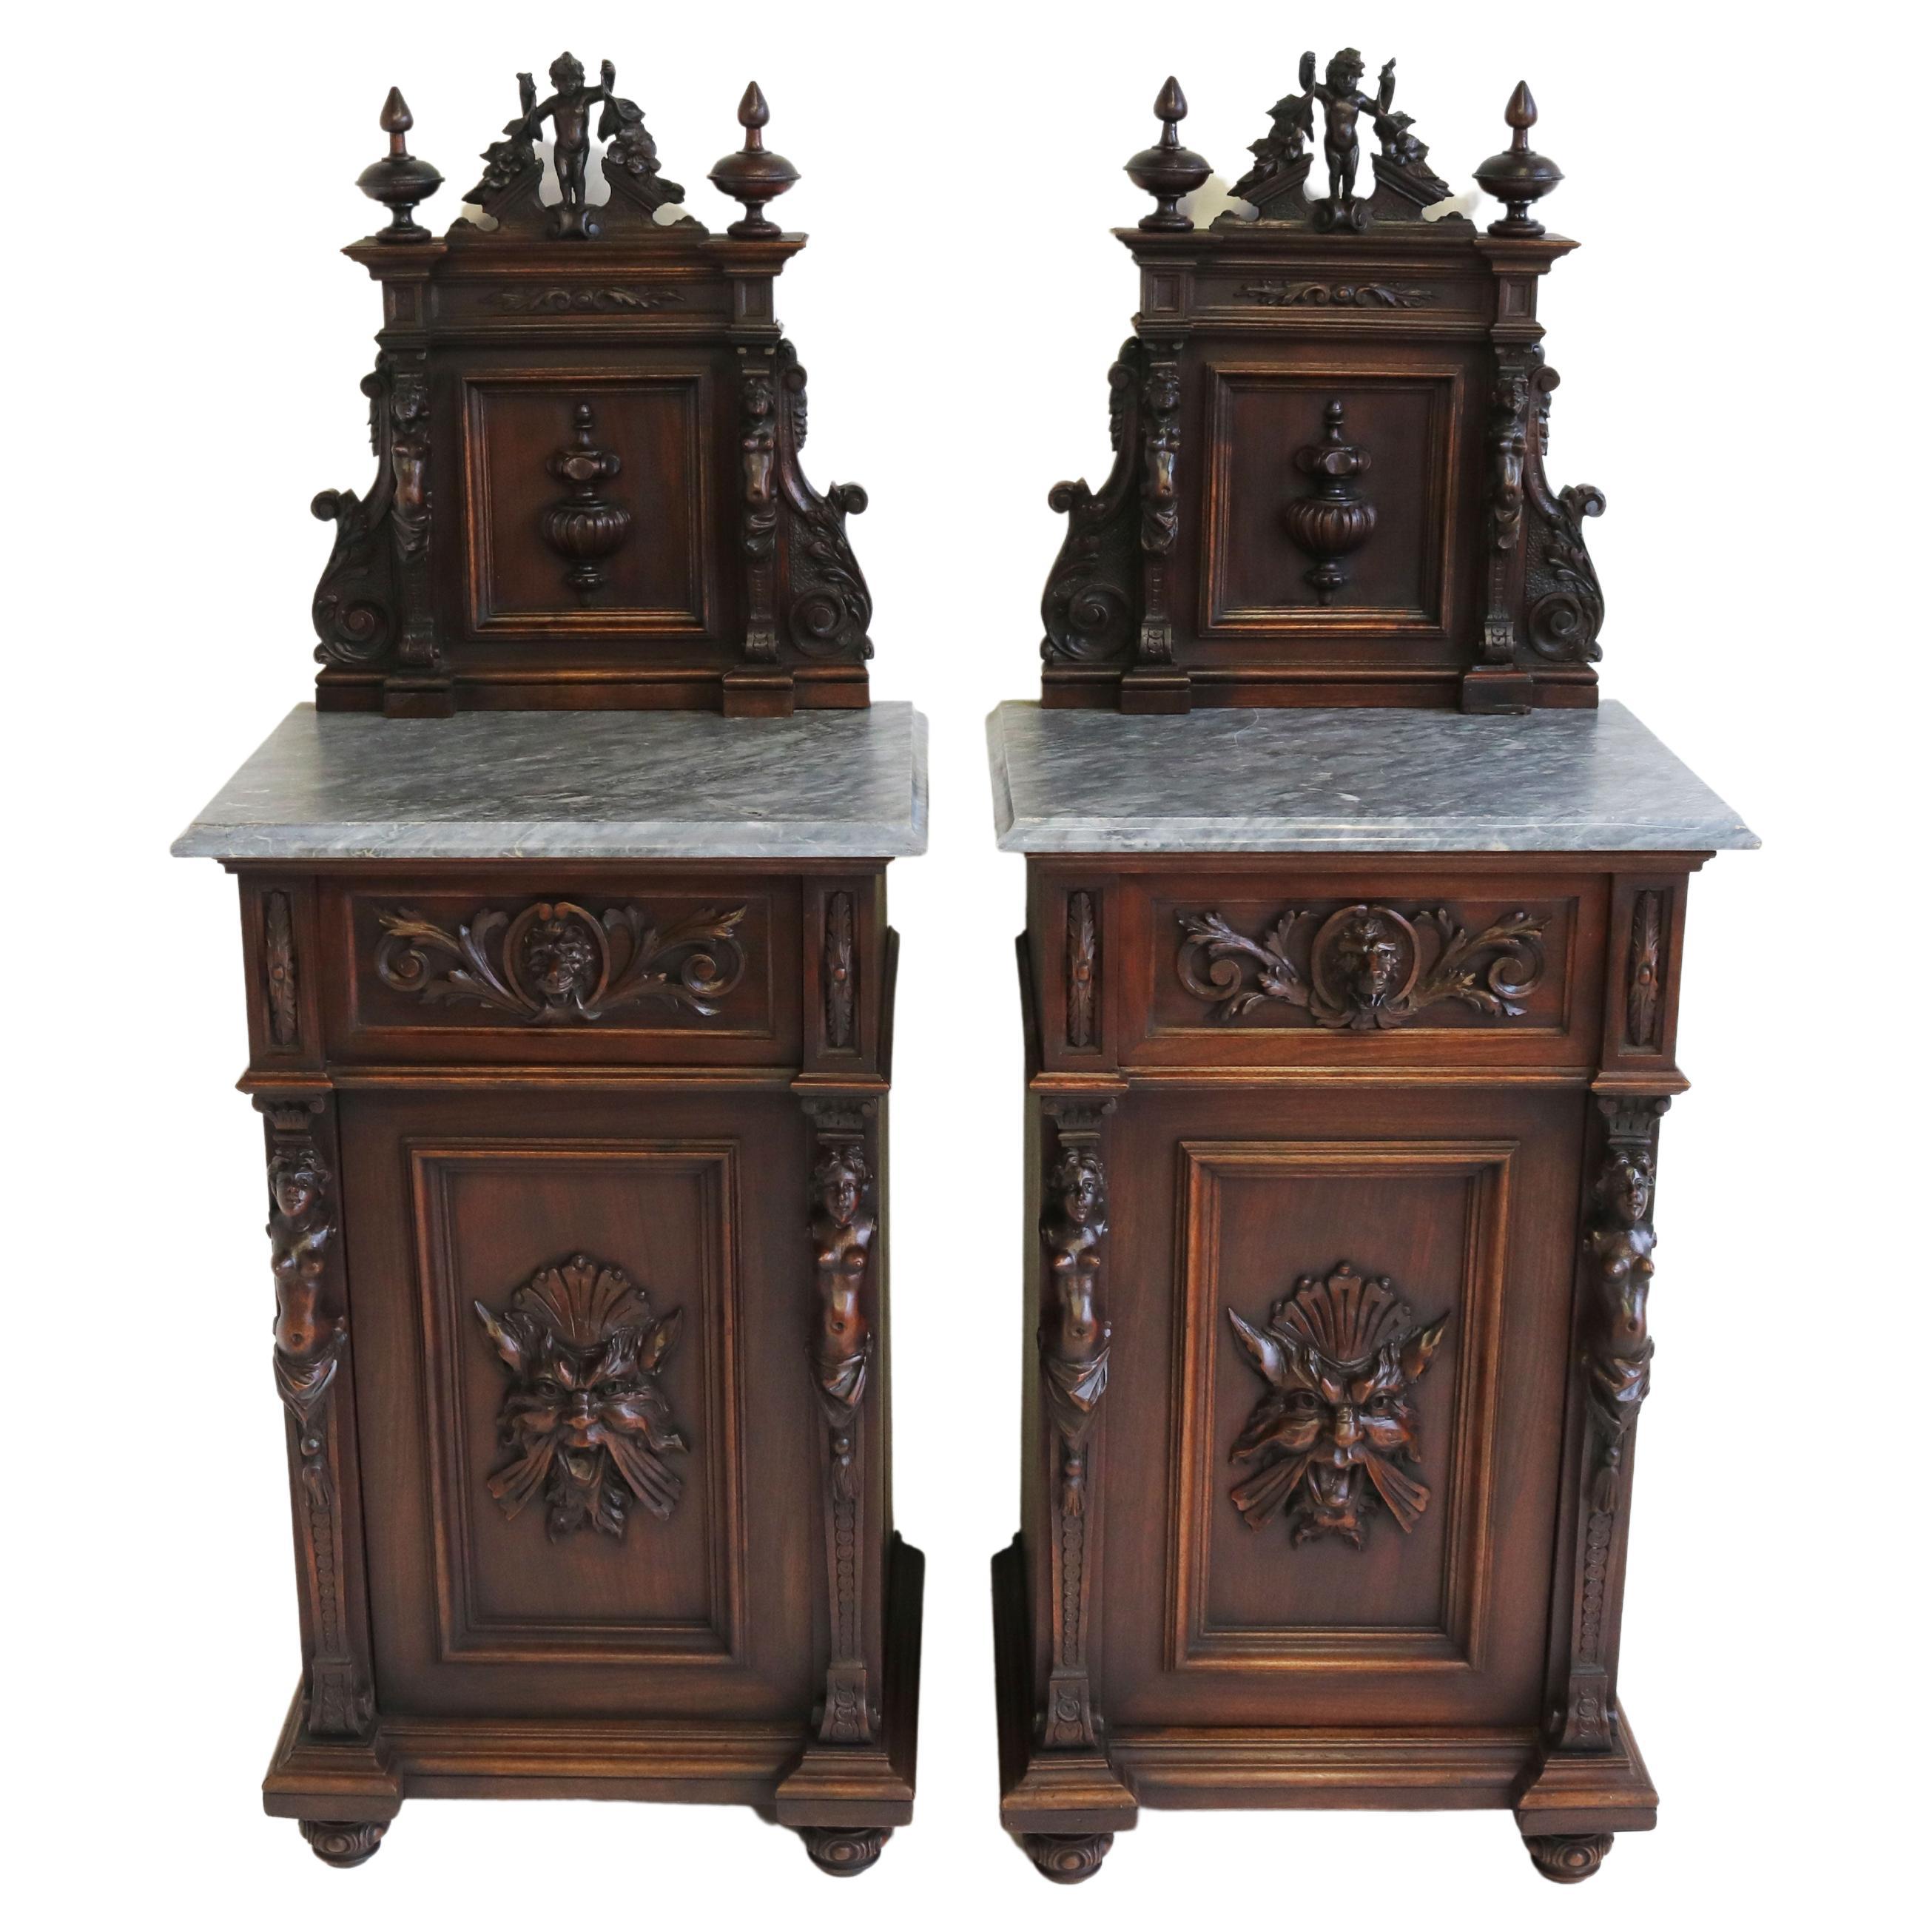 Antique 19th Century Italian Renaissance Revival Bedside Tables / Nightstands